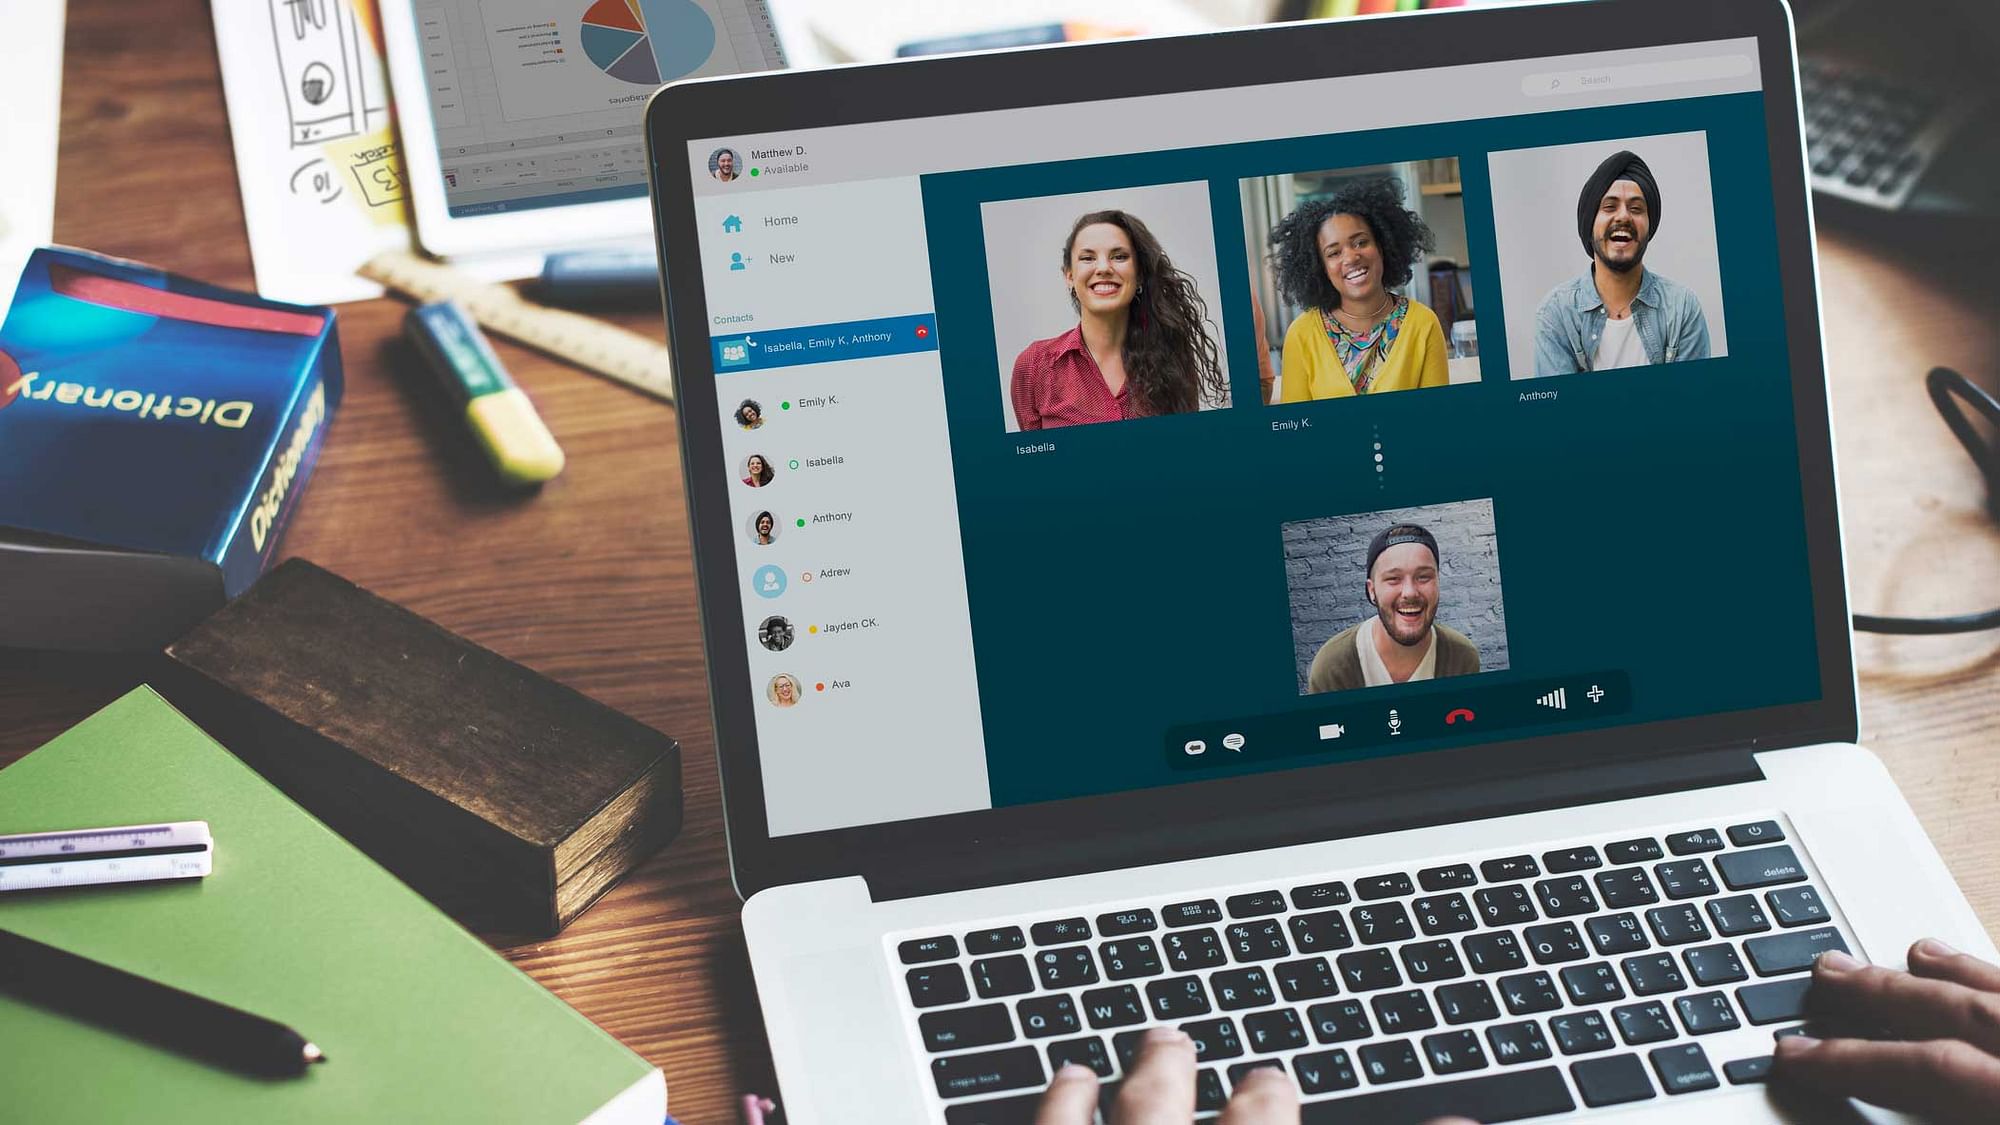 join skype meeting via browser